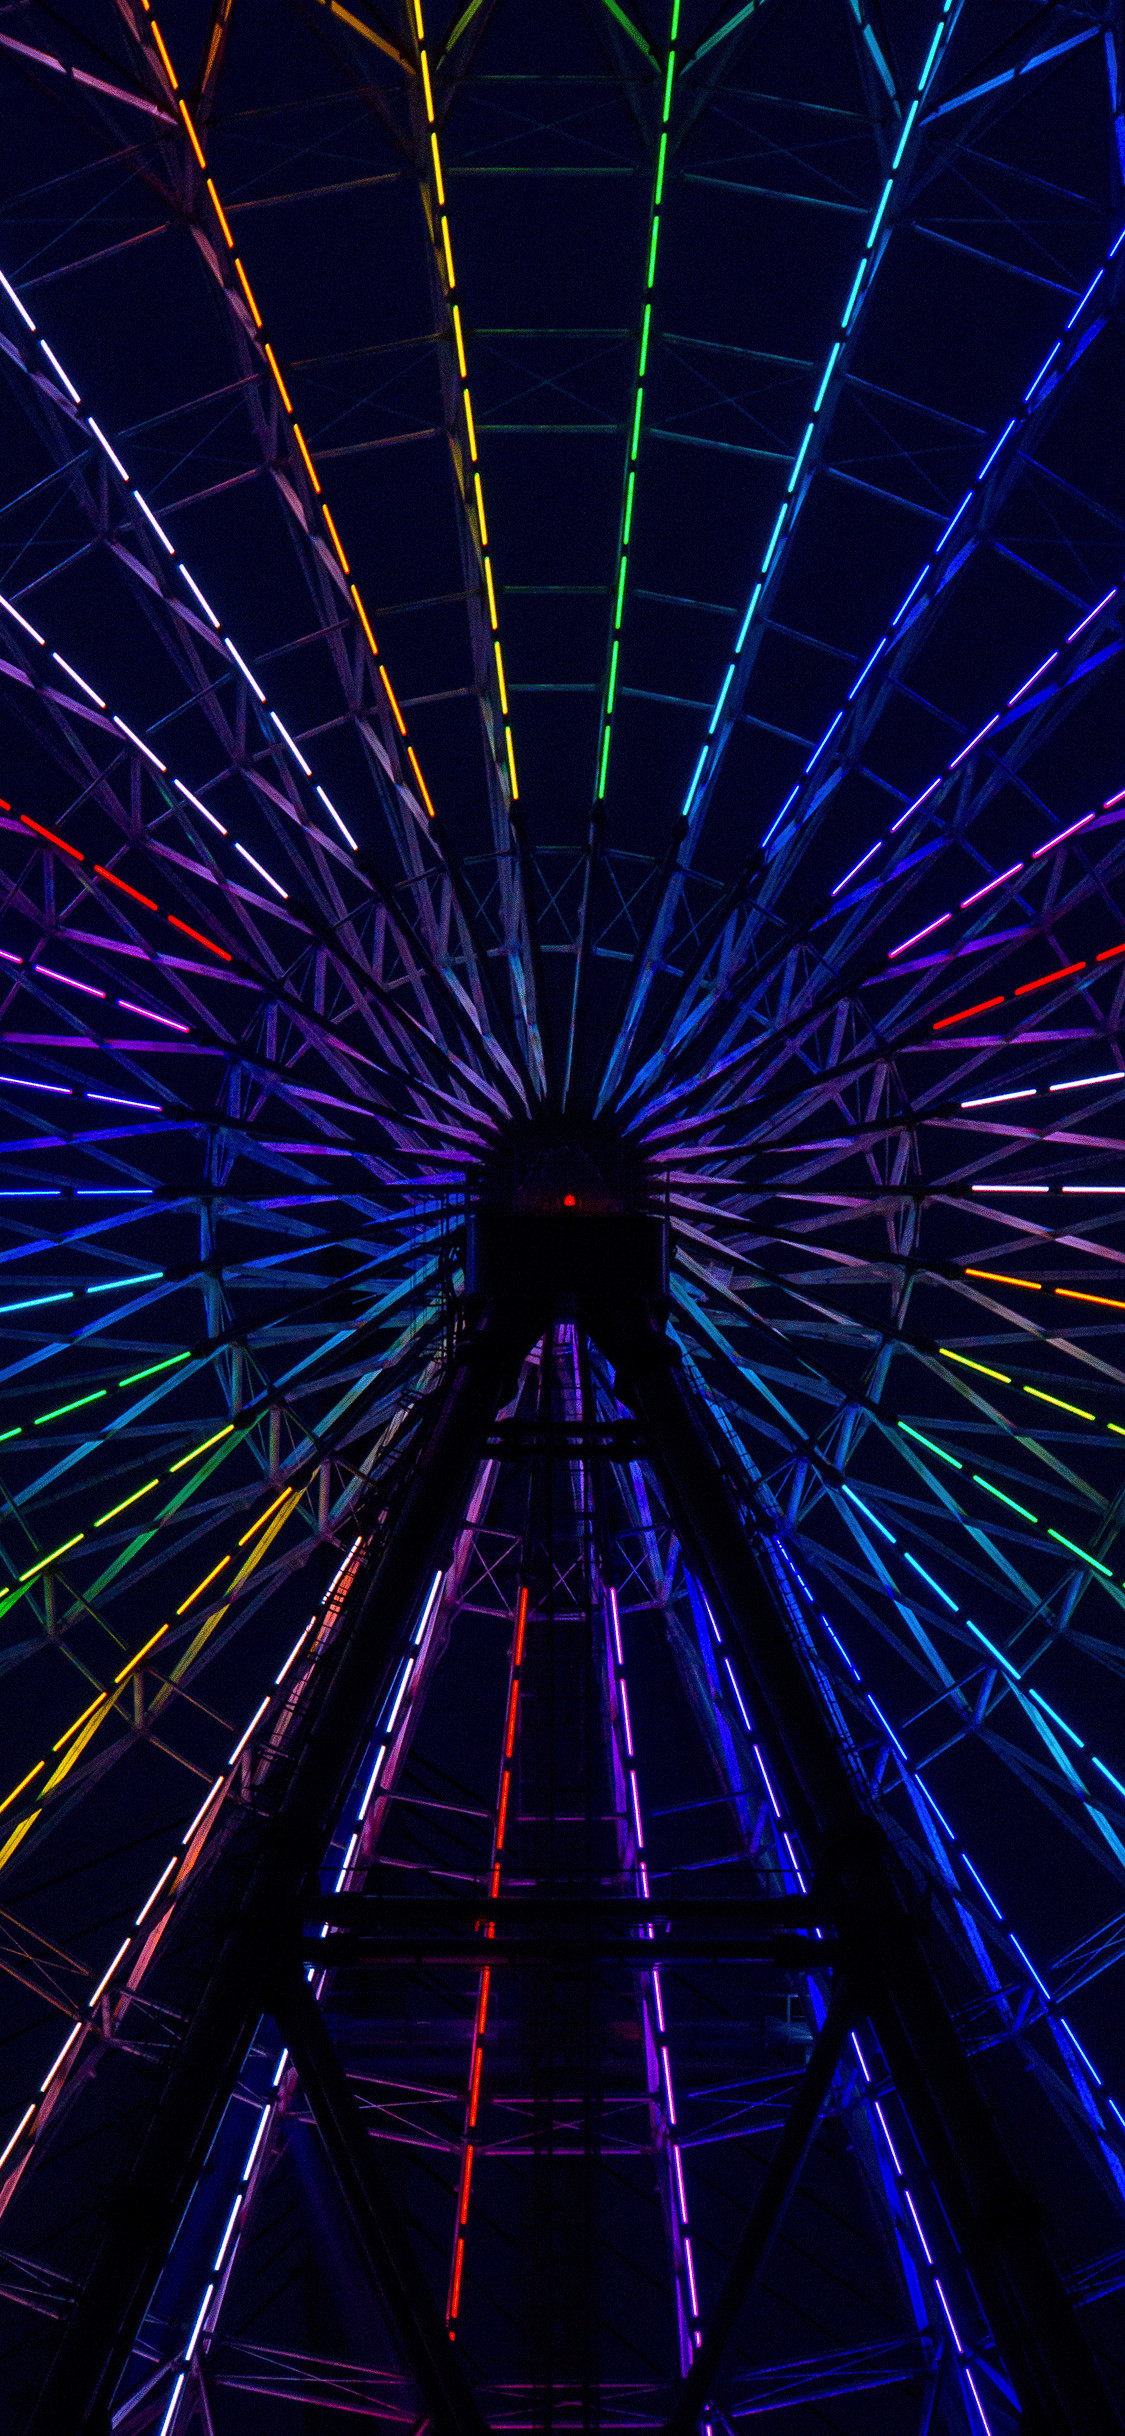 1125x2436 iPhone wallpaper neon wheel colorful Neon lights